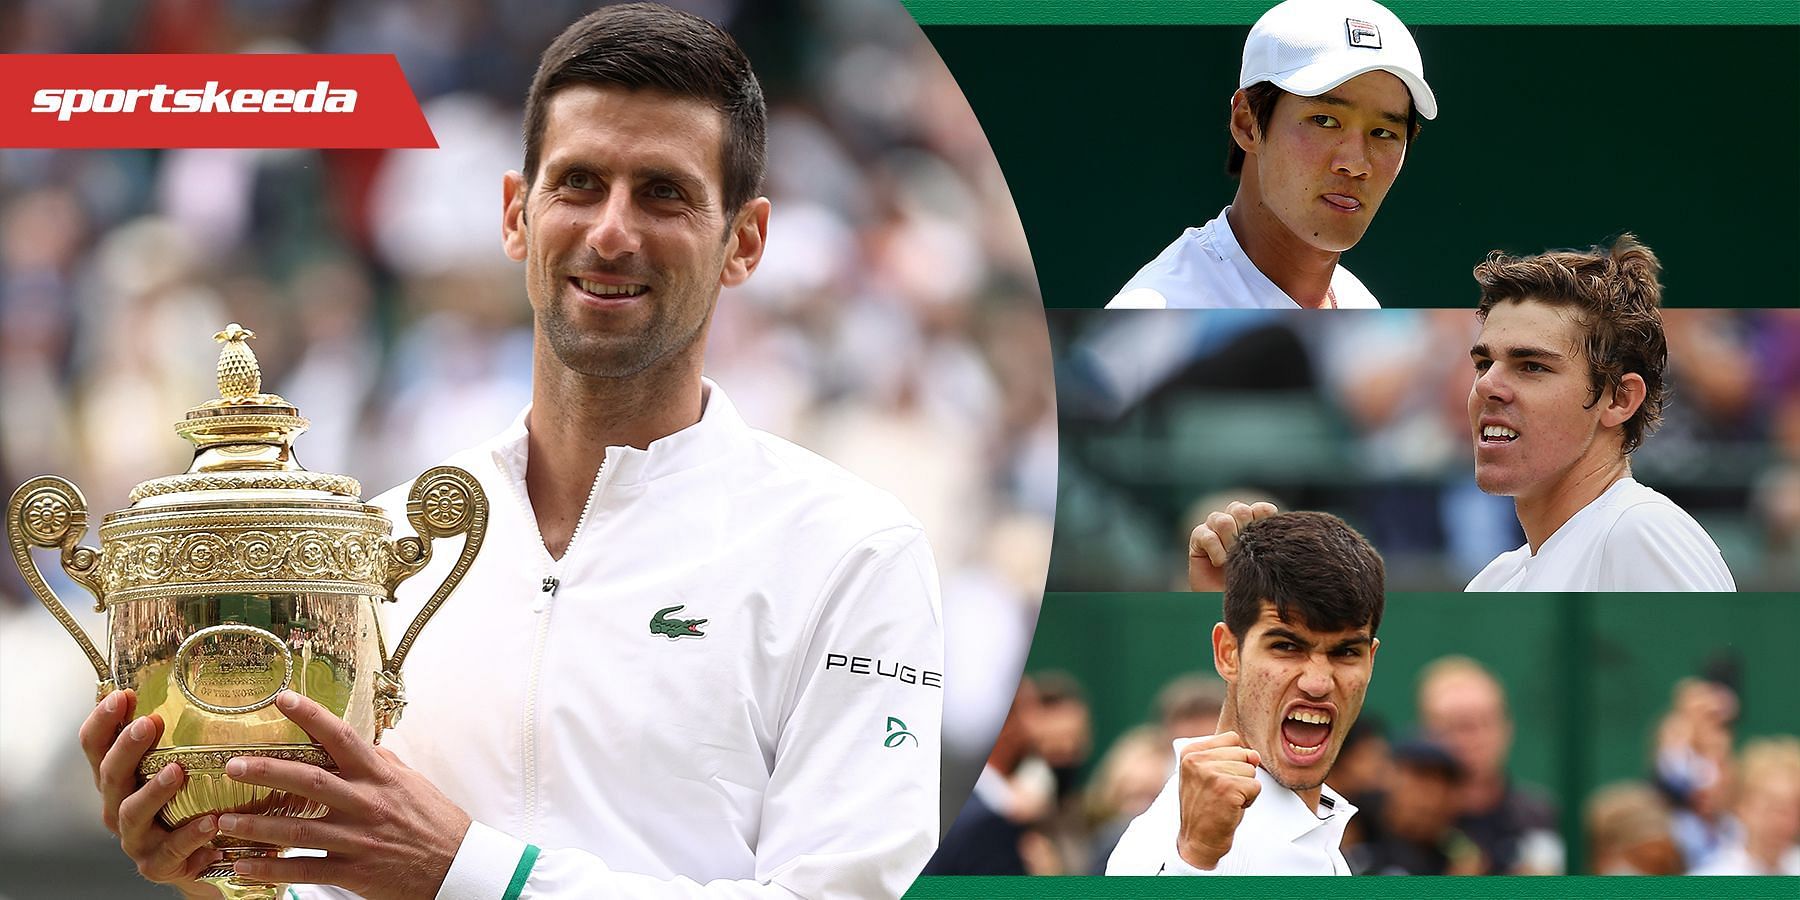 Novak Djokovic is aiming to win a fourth consecutive Wimbledon title.